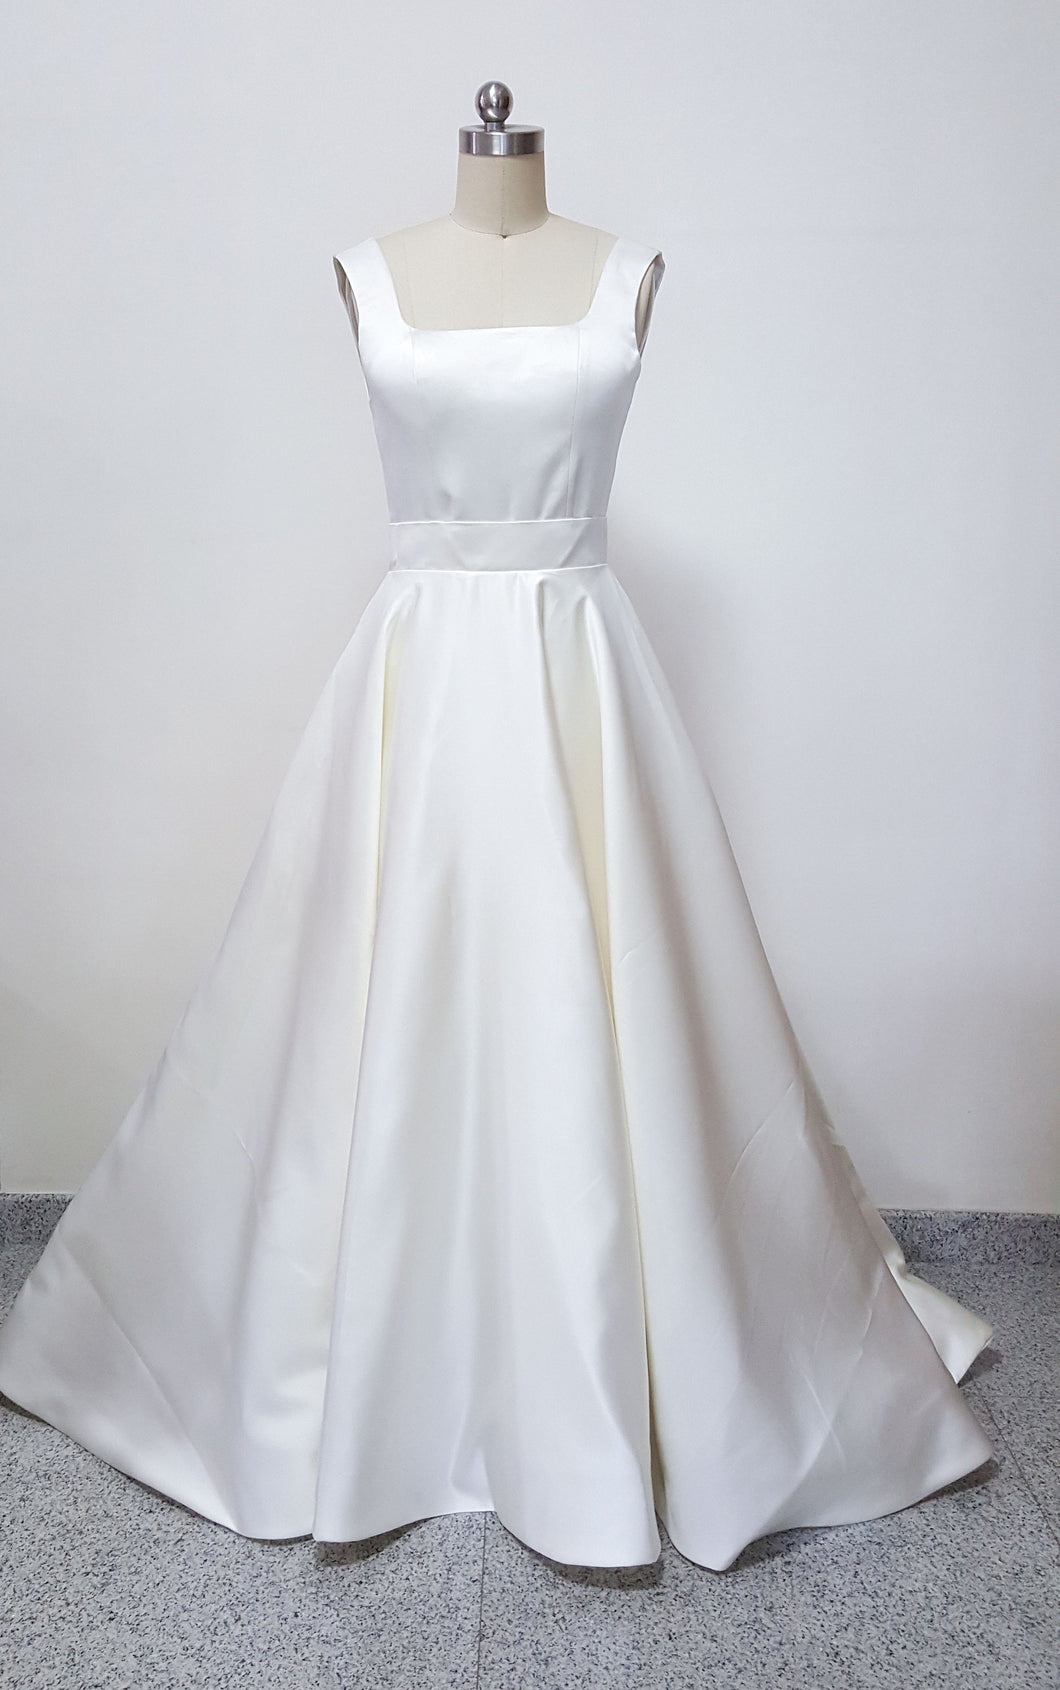 Maxi bridal skirt duchess satin wedding ballgown skirt with train bridal separates cosplay costume